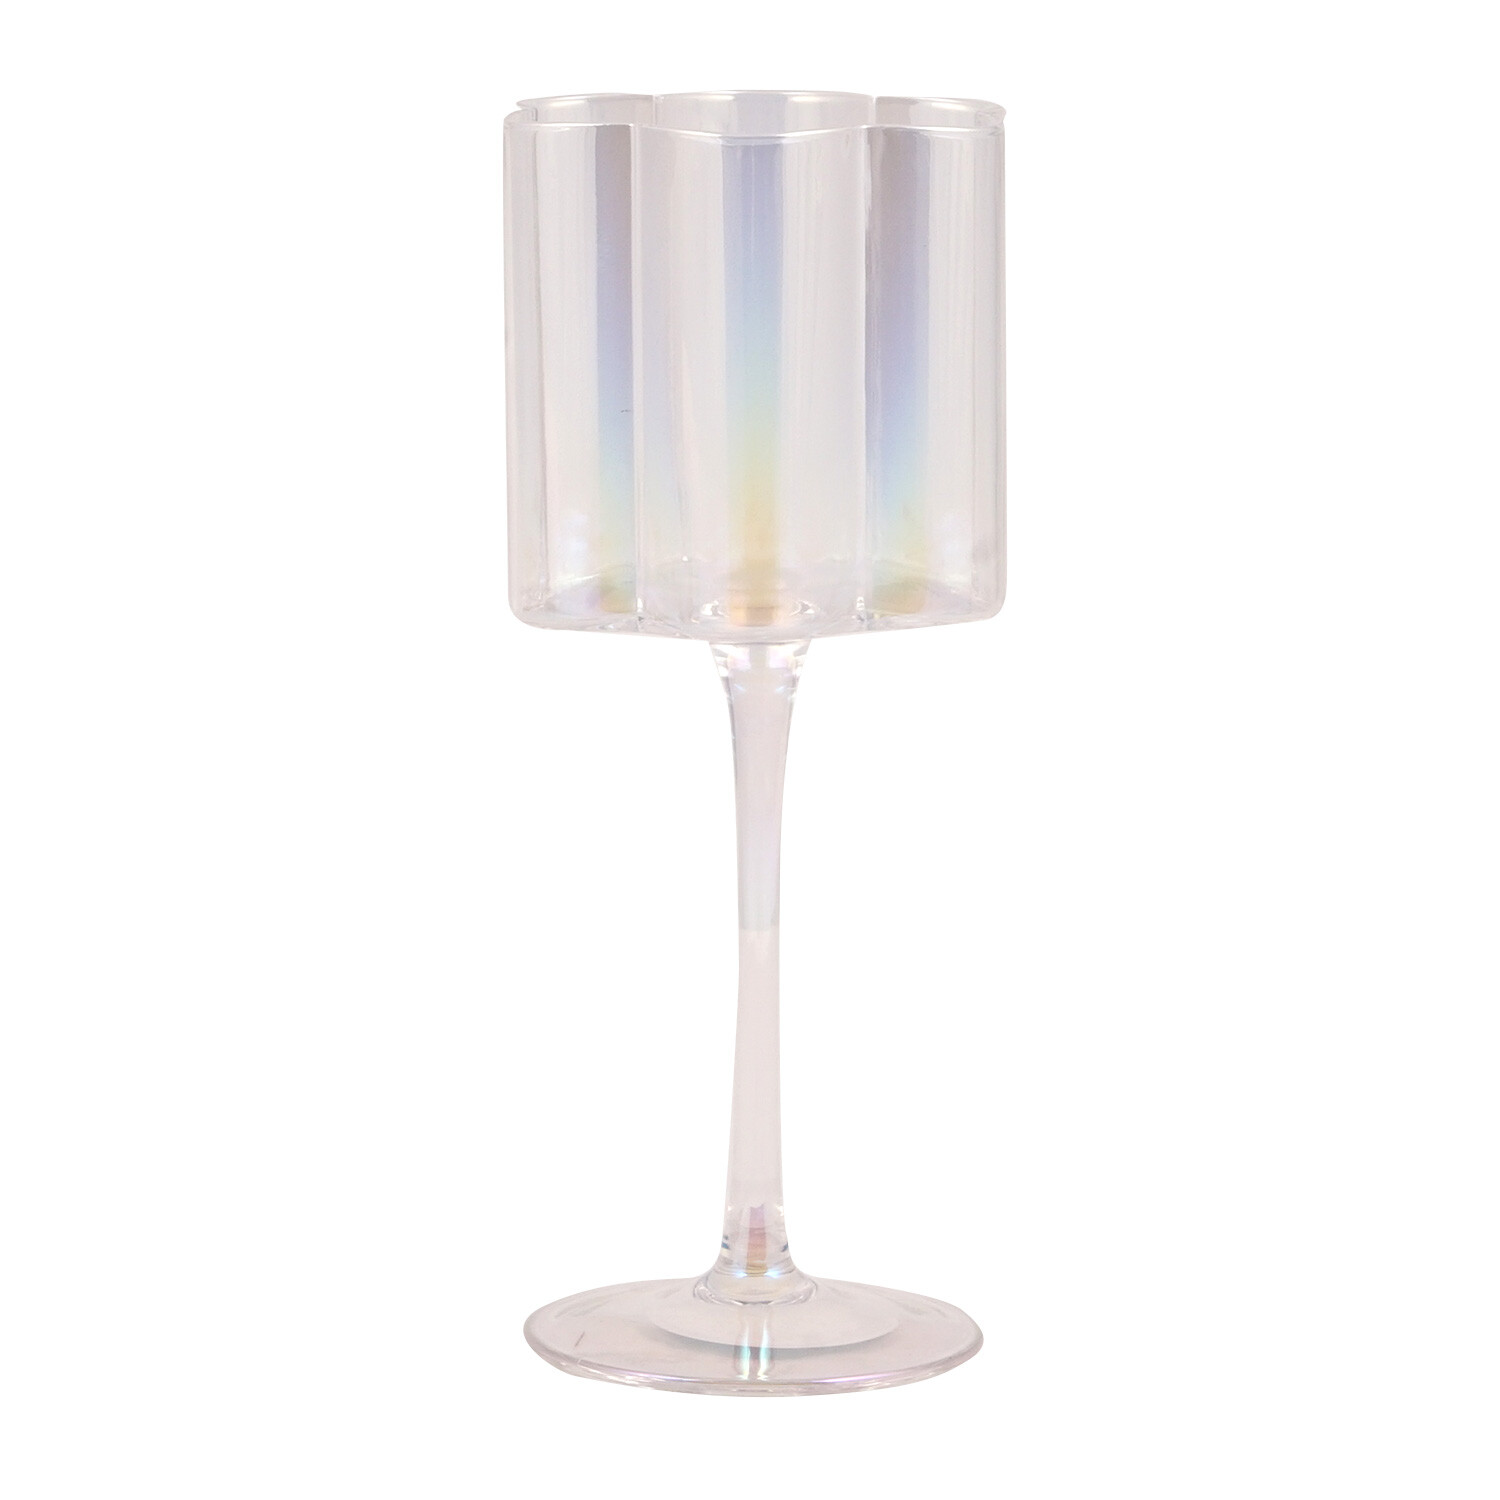 Fleur Lustre Wine Glass Image